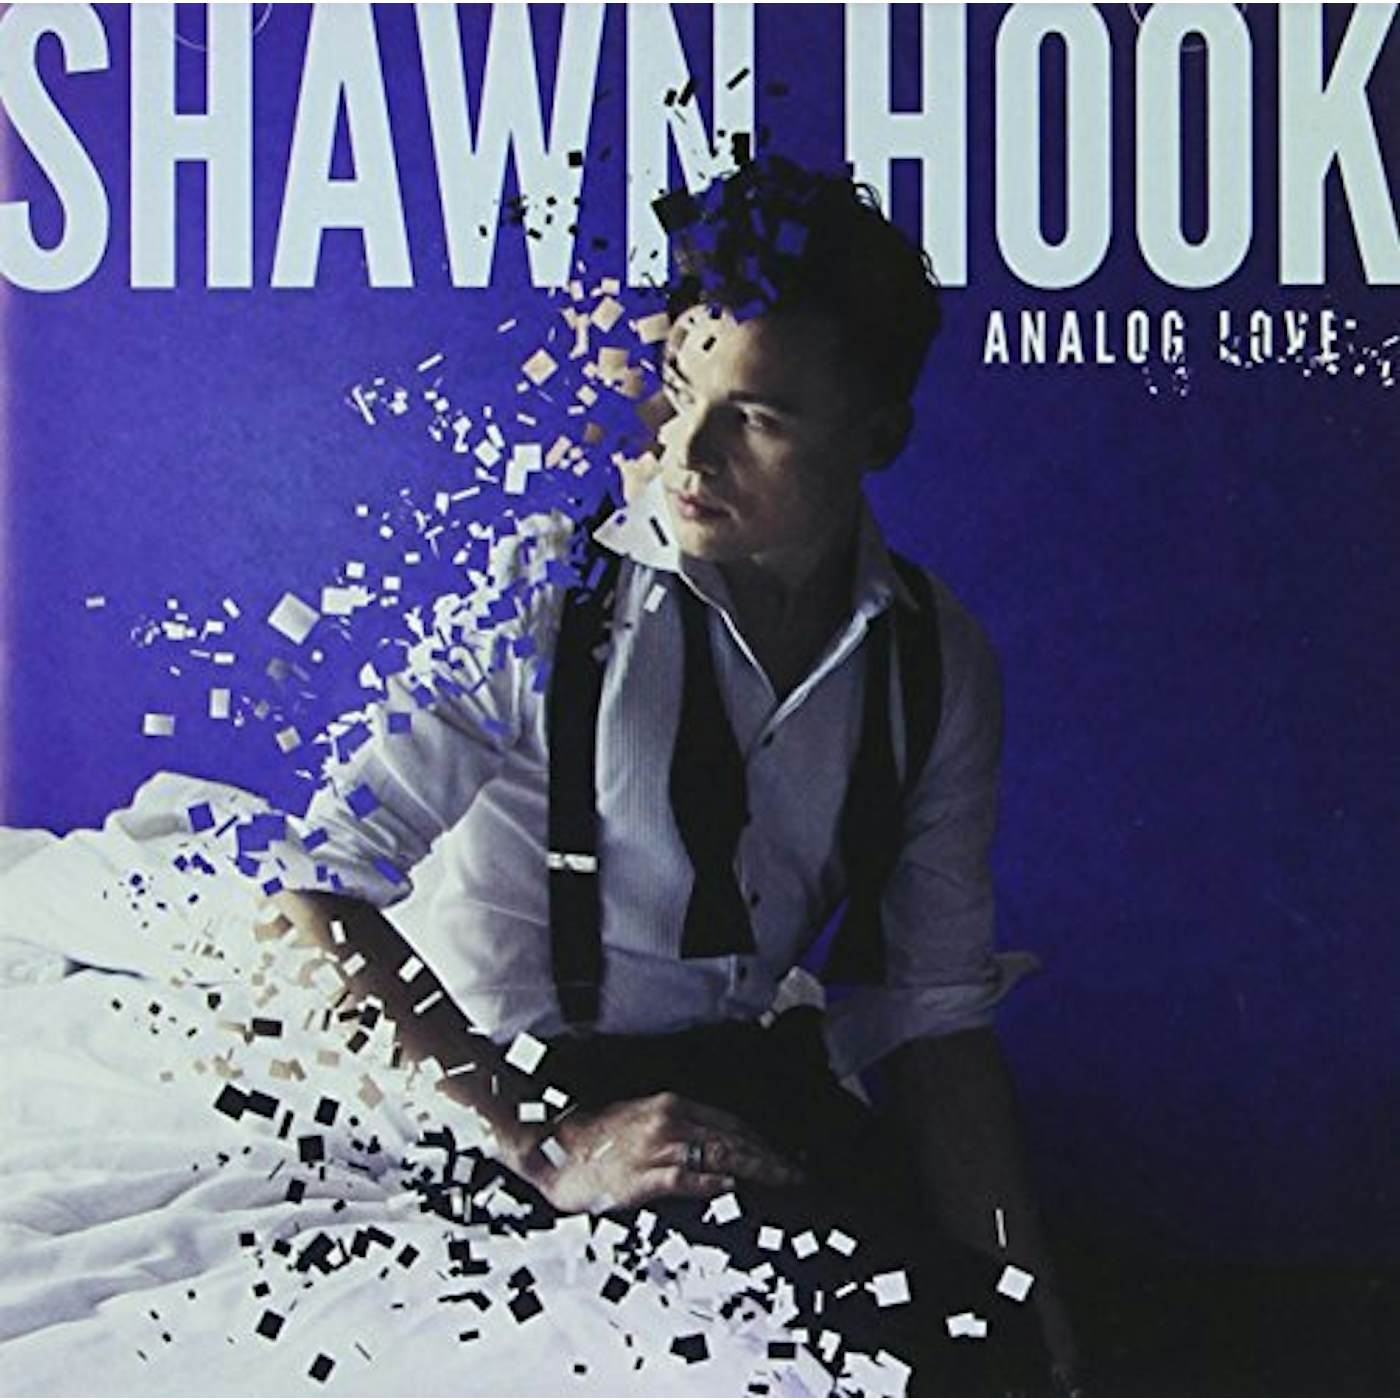 Shawn Hook ANALOG LOVE CD